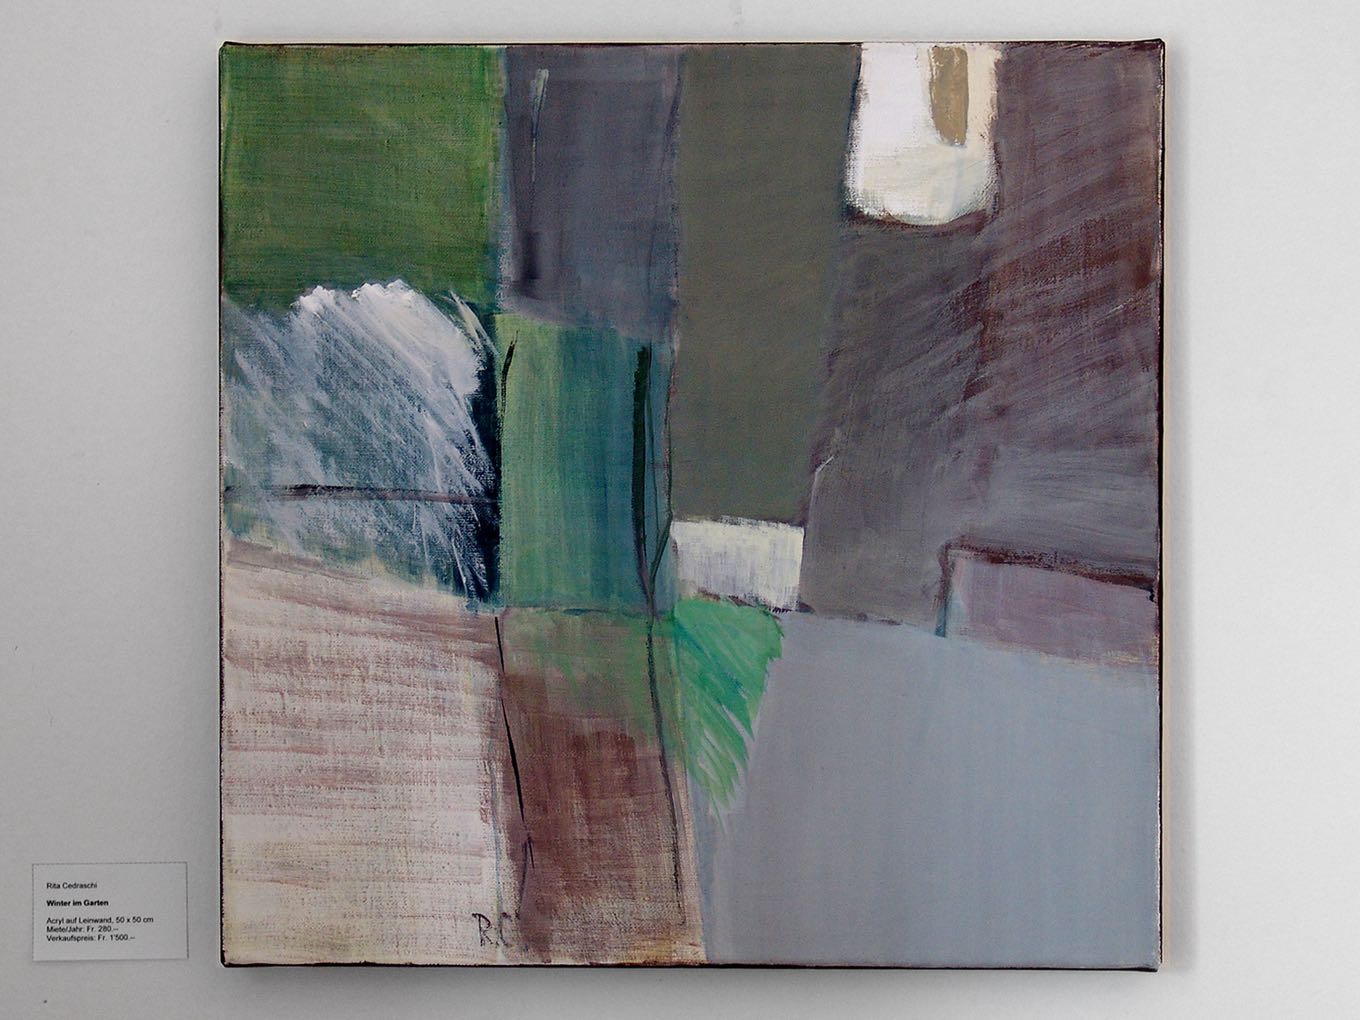 Rita Cedraschi: Winter im Garten, 2010, Acryl auf Leinwand, 50 x 50cm